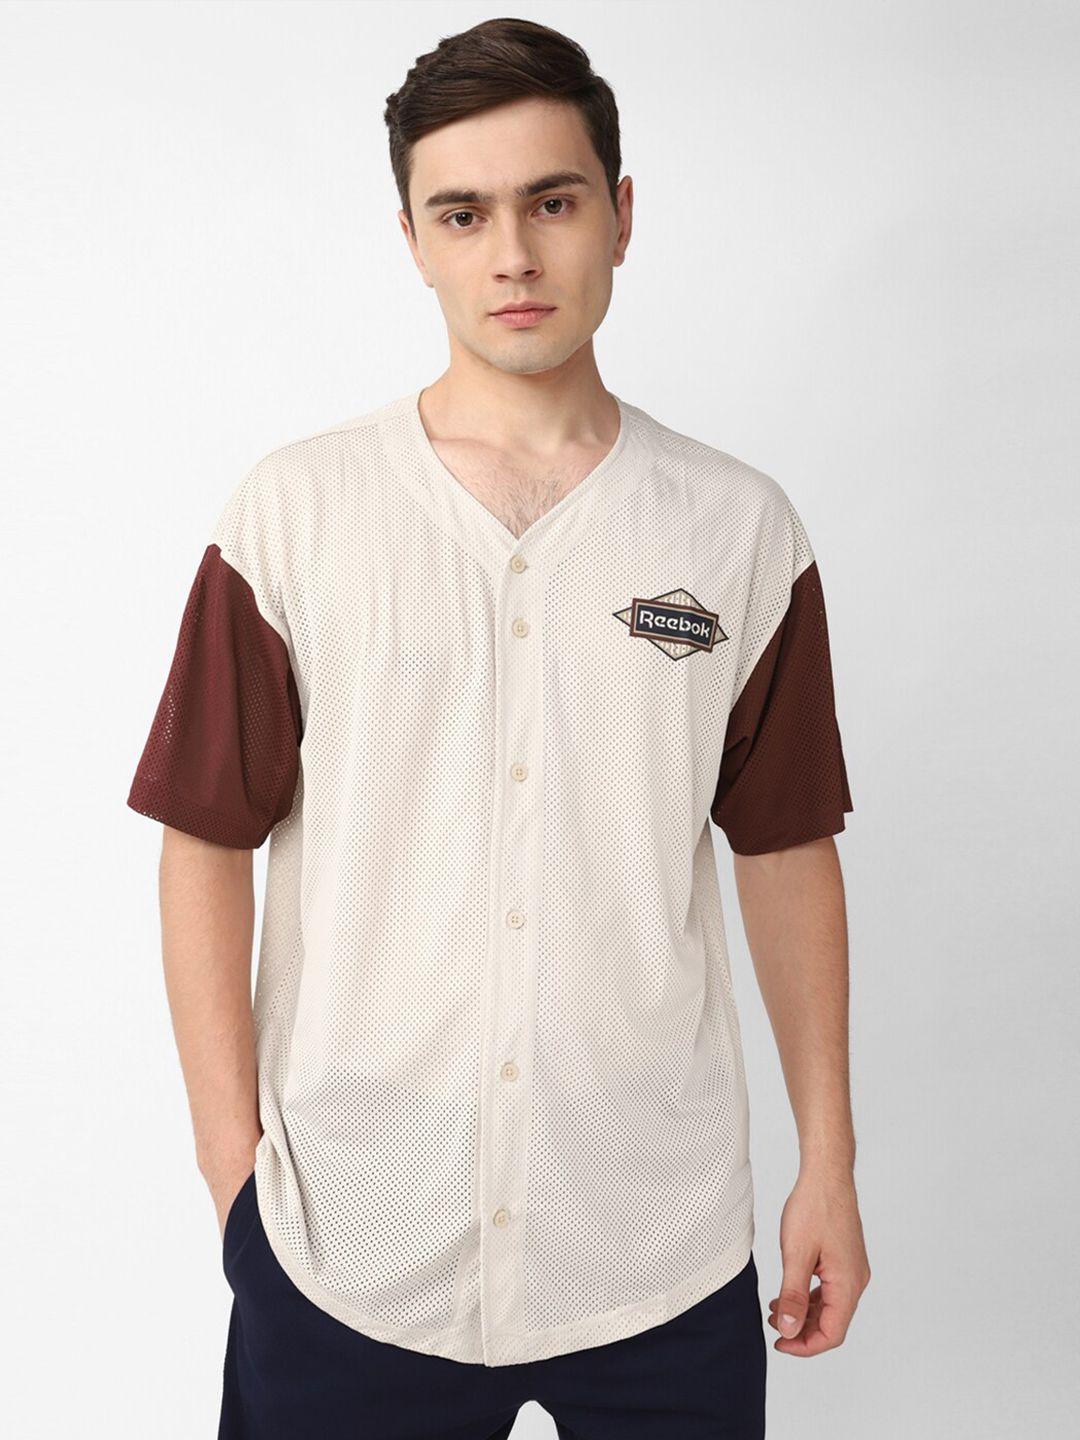 reebok-colourblocked-v-neck-cl-sg-baseball-jersey-t-shirt